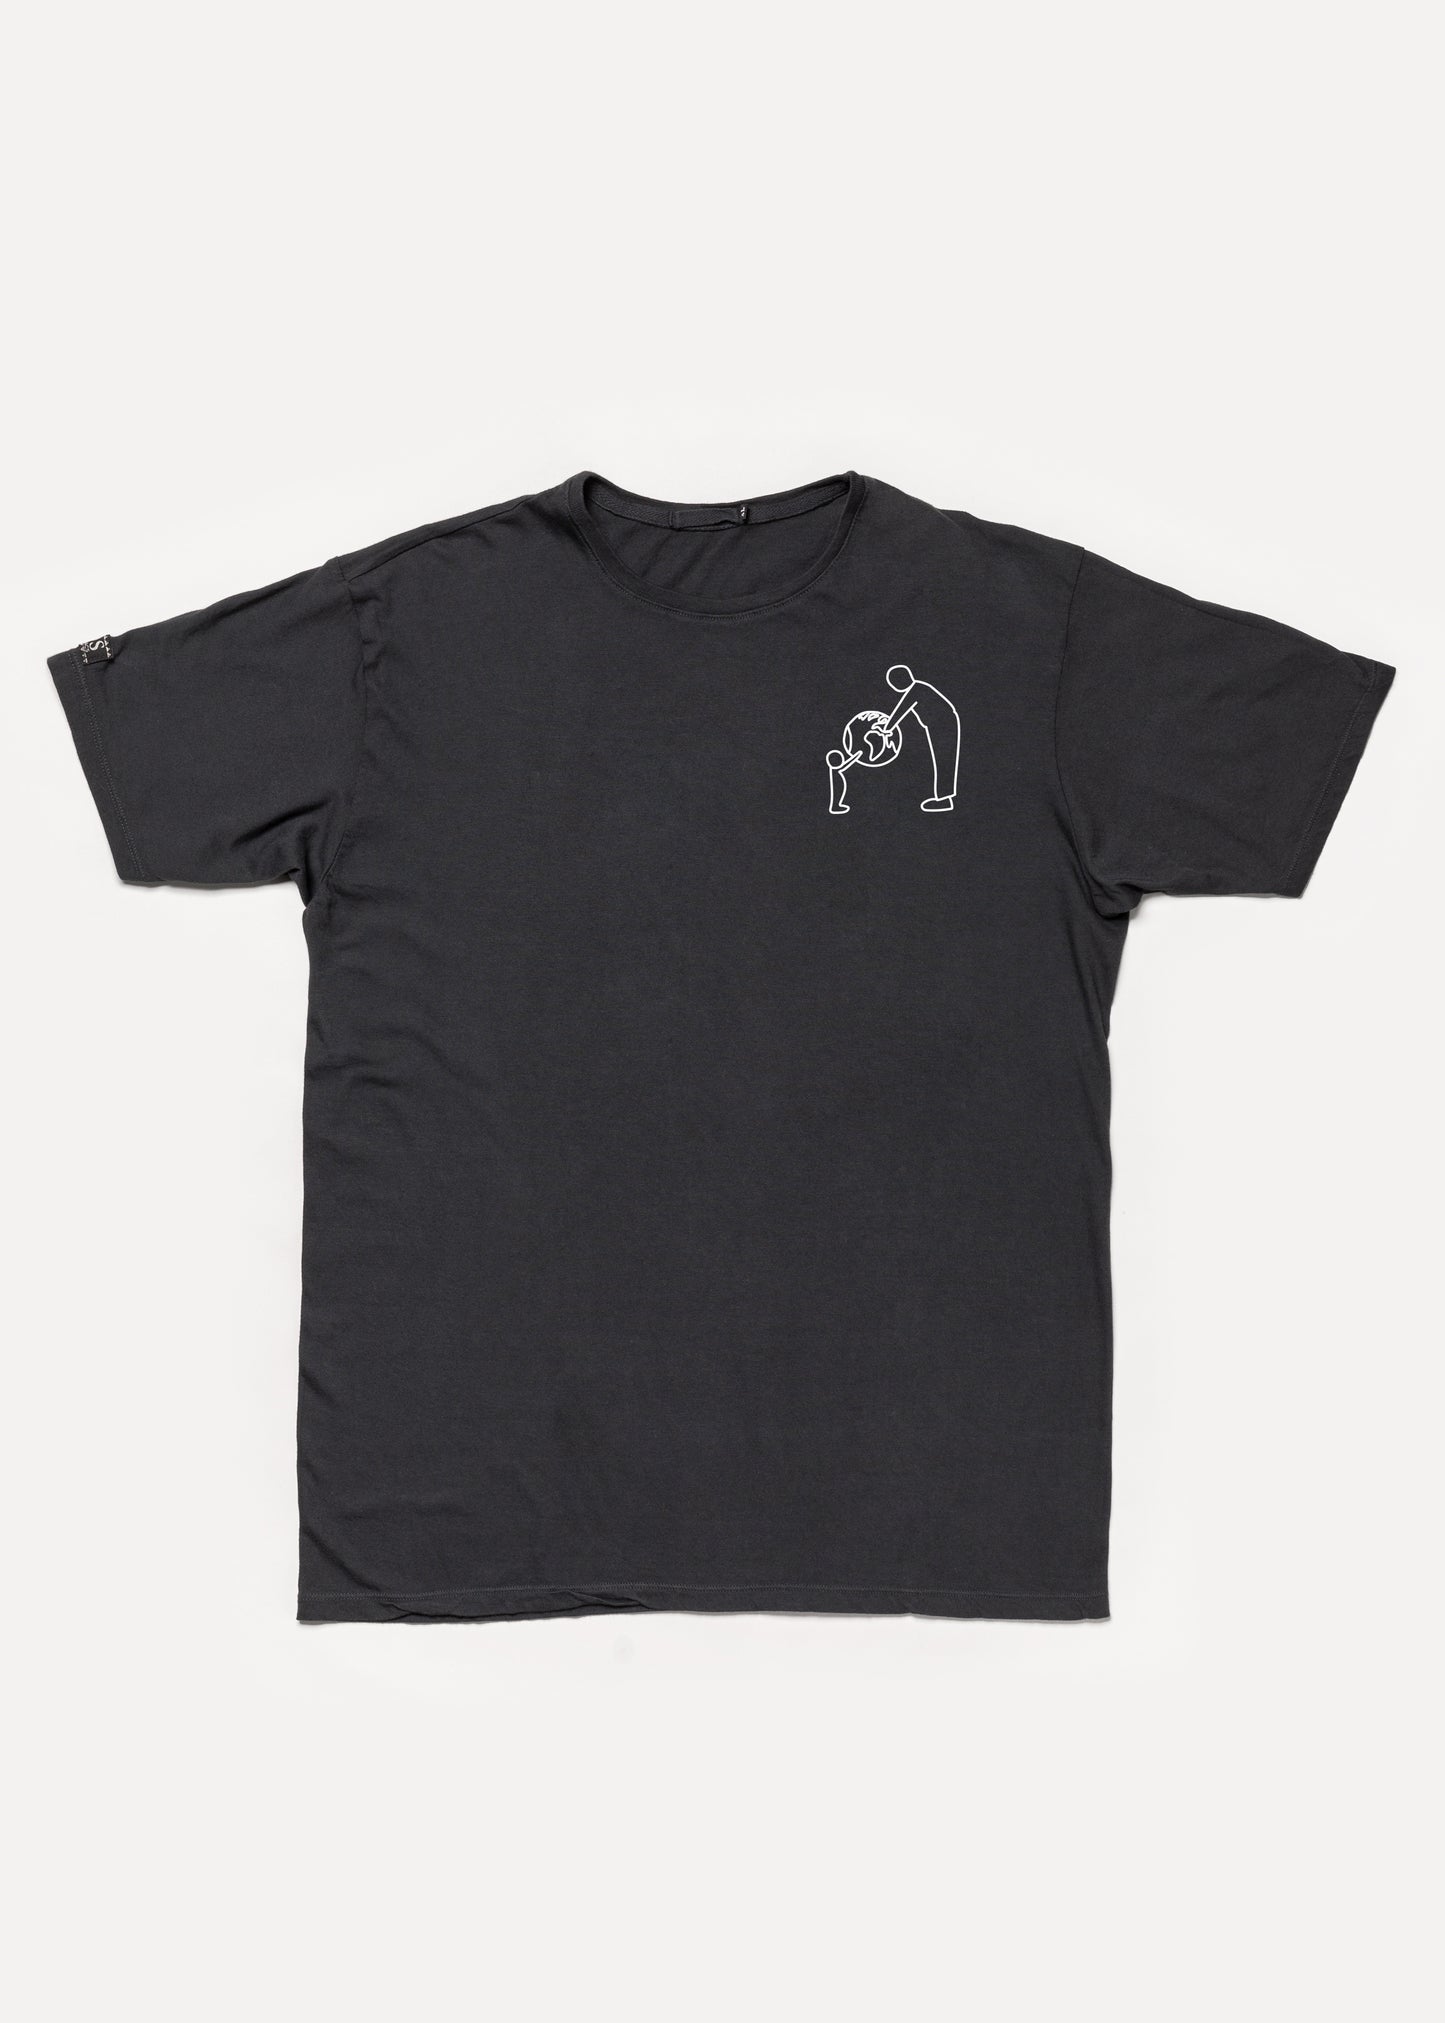 Black T-shirt - Earth